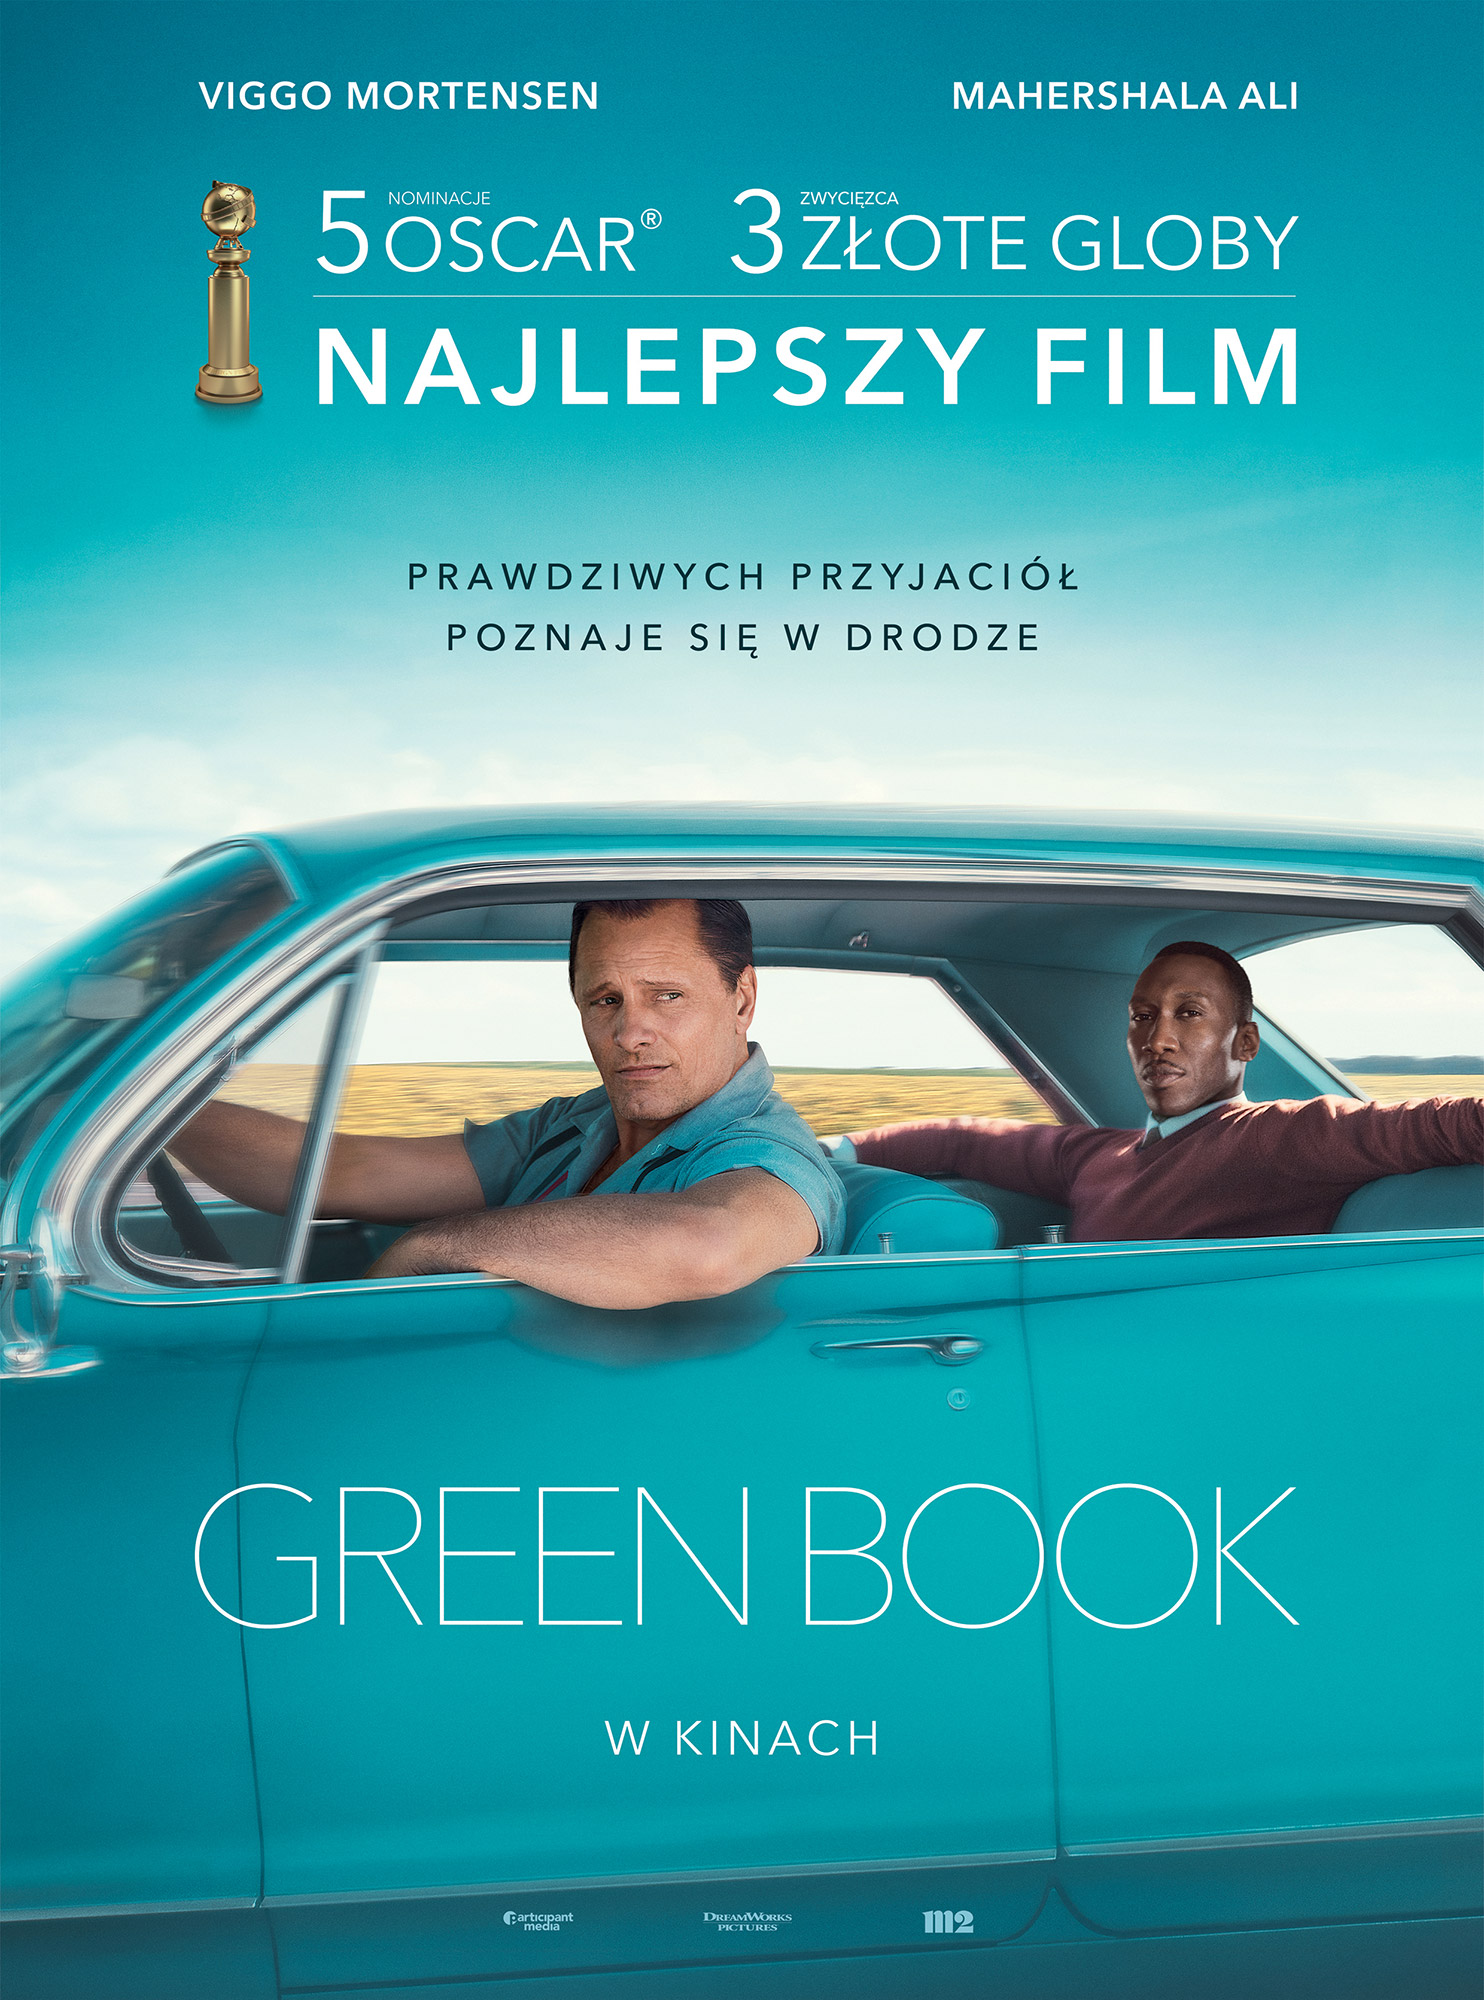 Plakat promujący film Green Book (źródło: M2 Films)